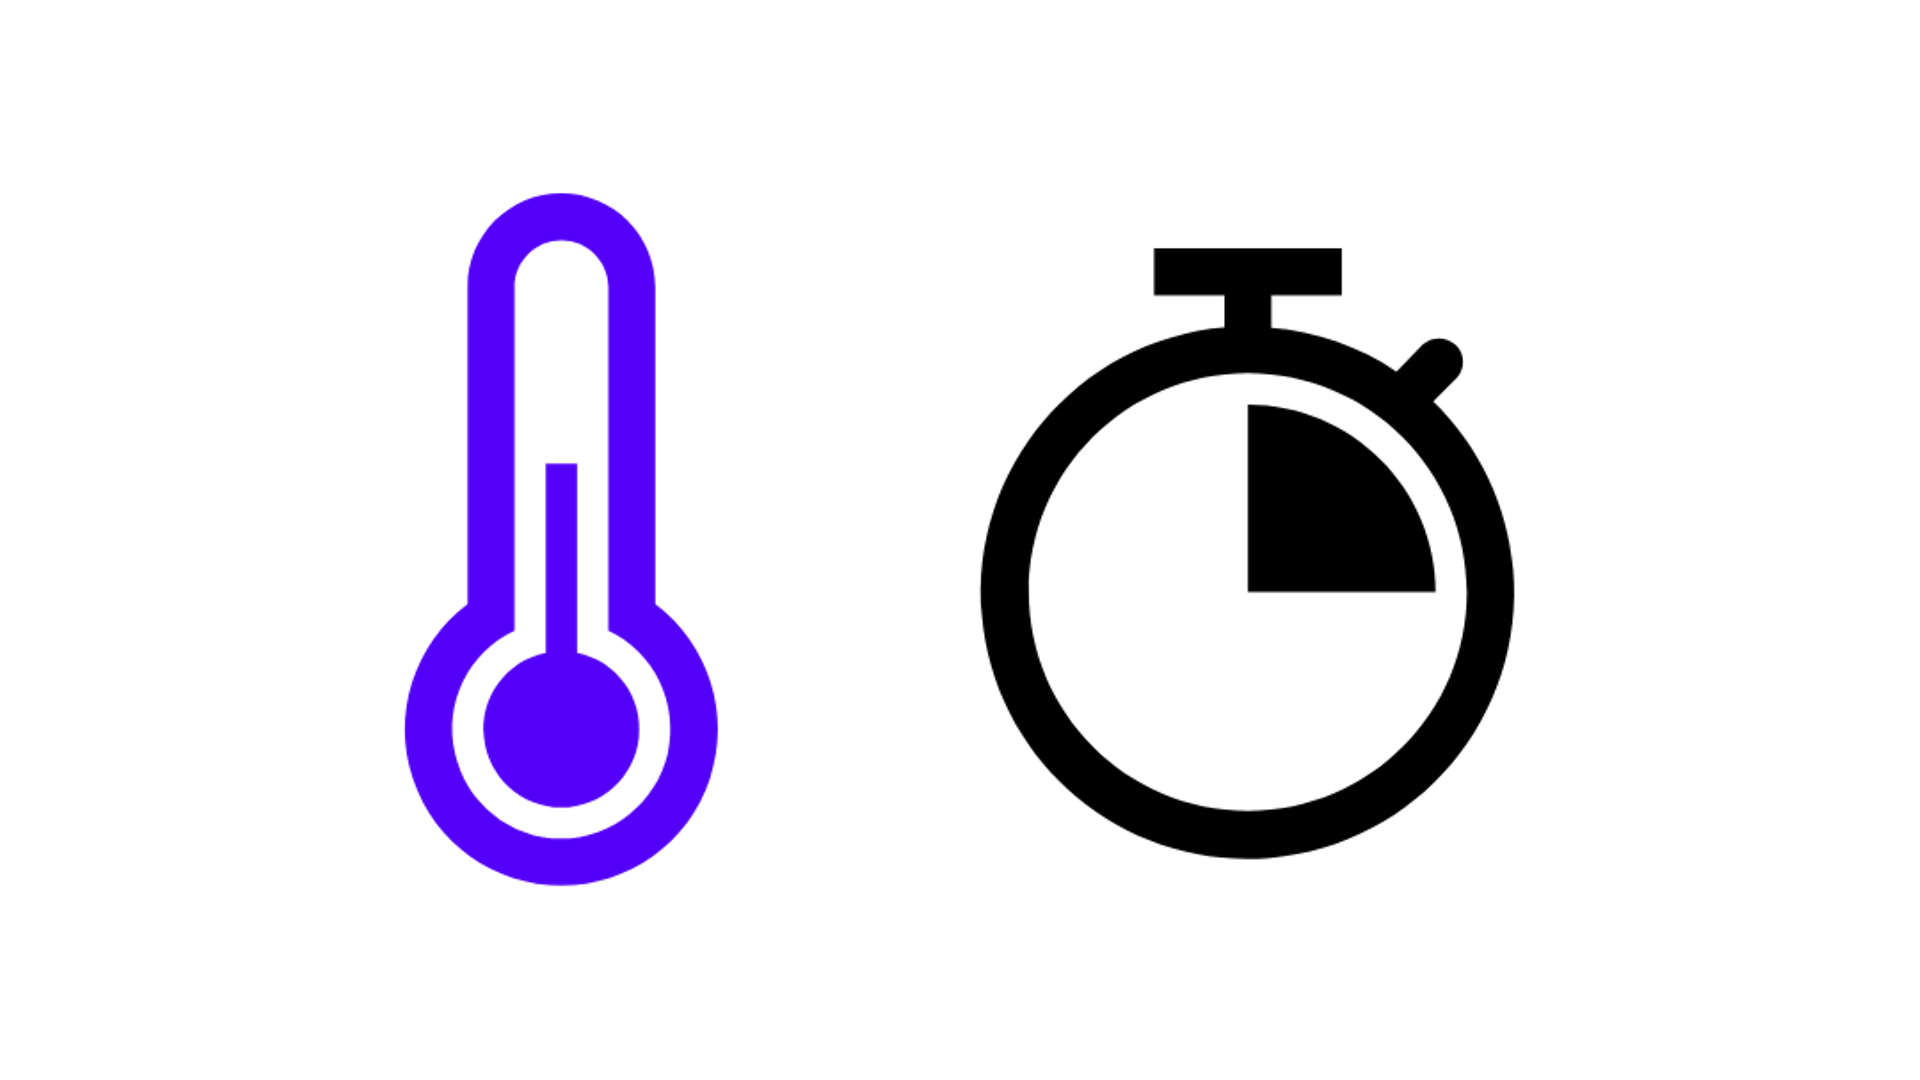 синий символ термометра и символ часов, четверть часа